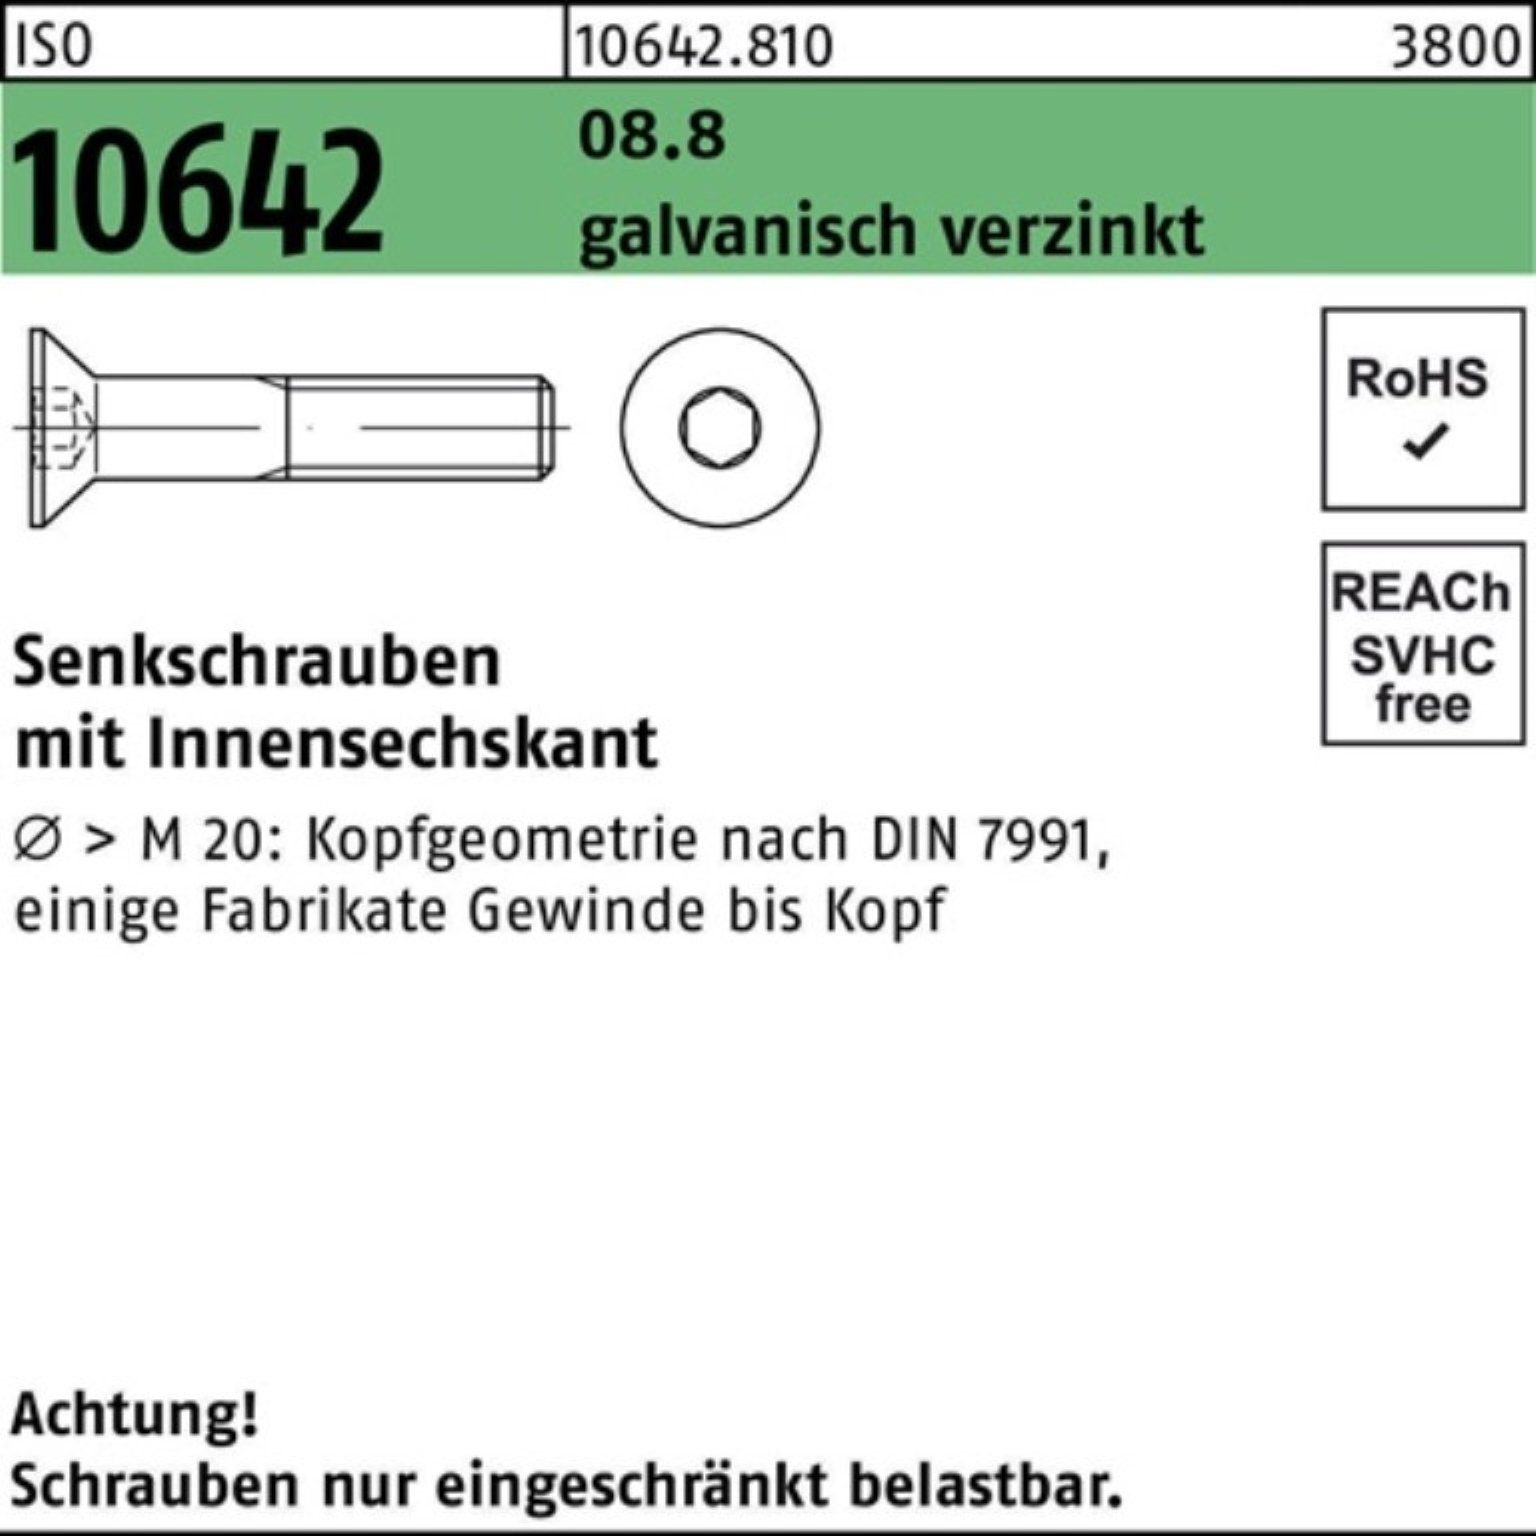 Senkschraube 100er 10642 Reyher Senkschraube Innen-6kt M6x 8.8 Pack ISO galv.verz. 100 10